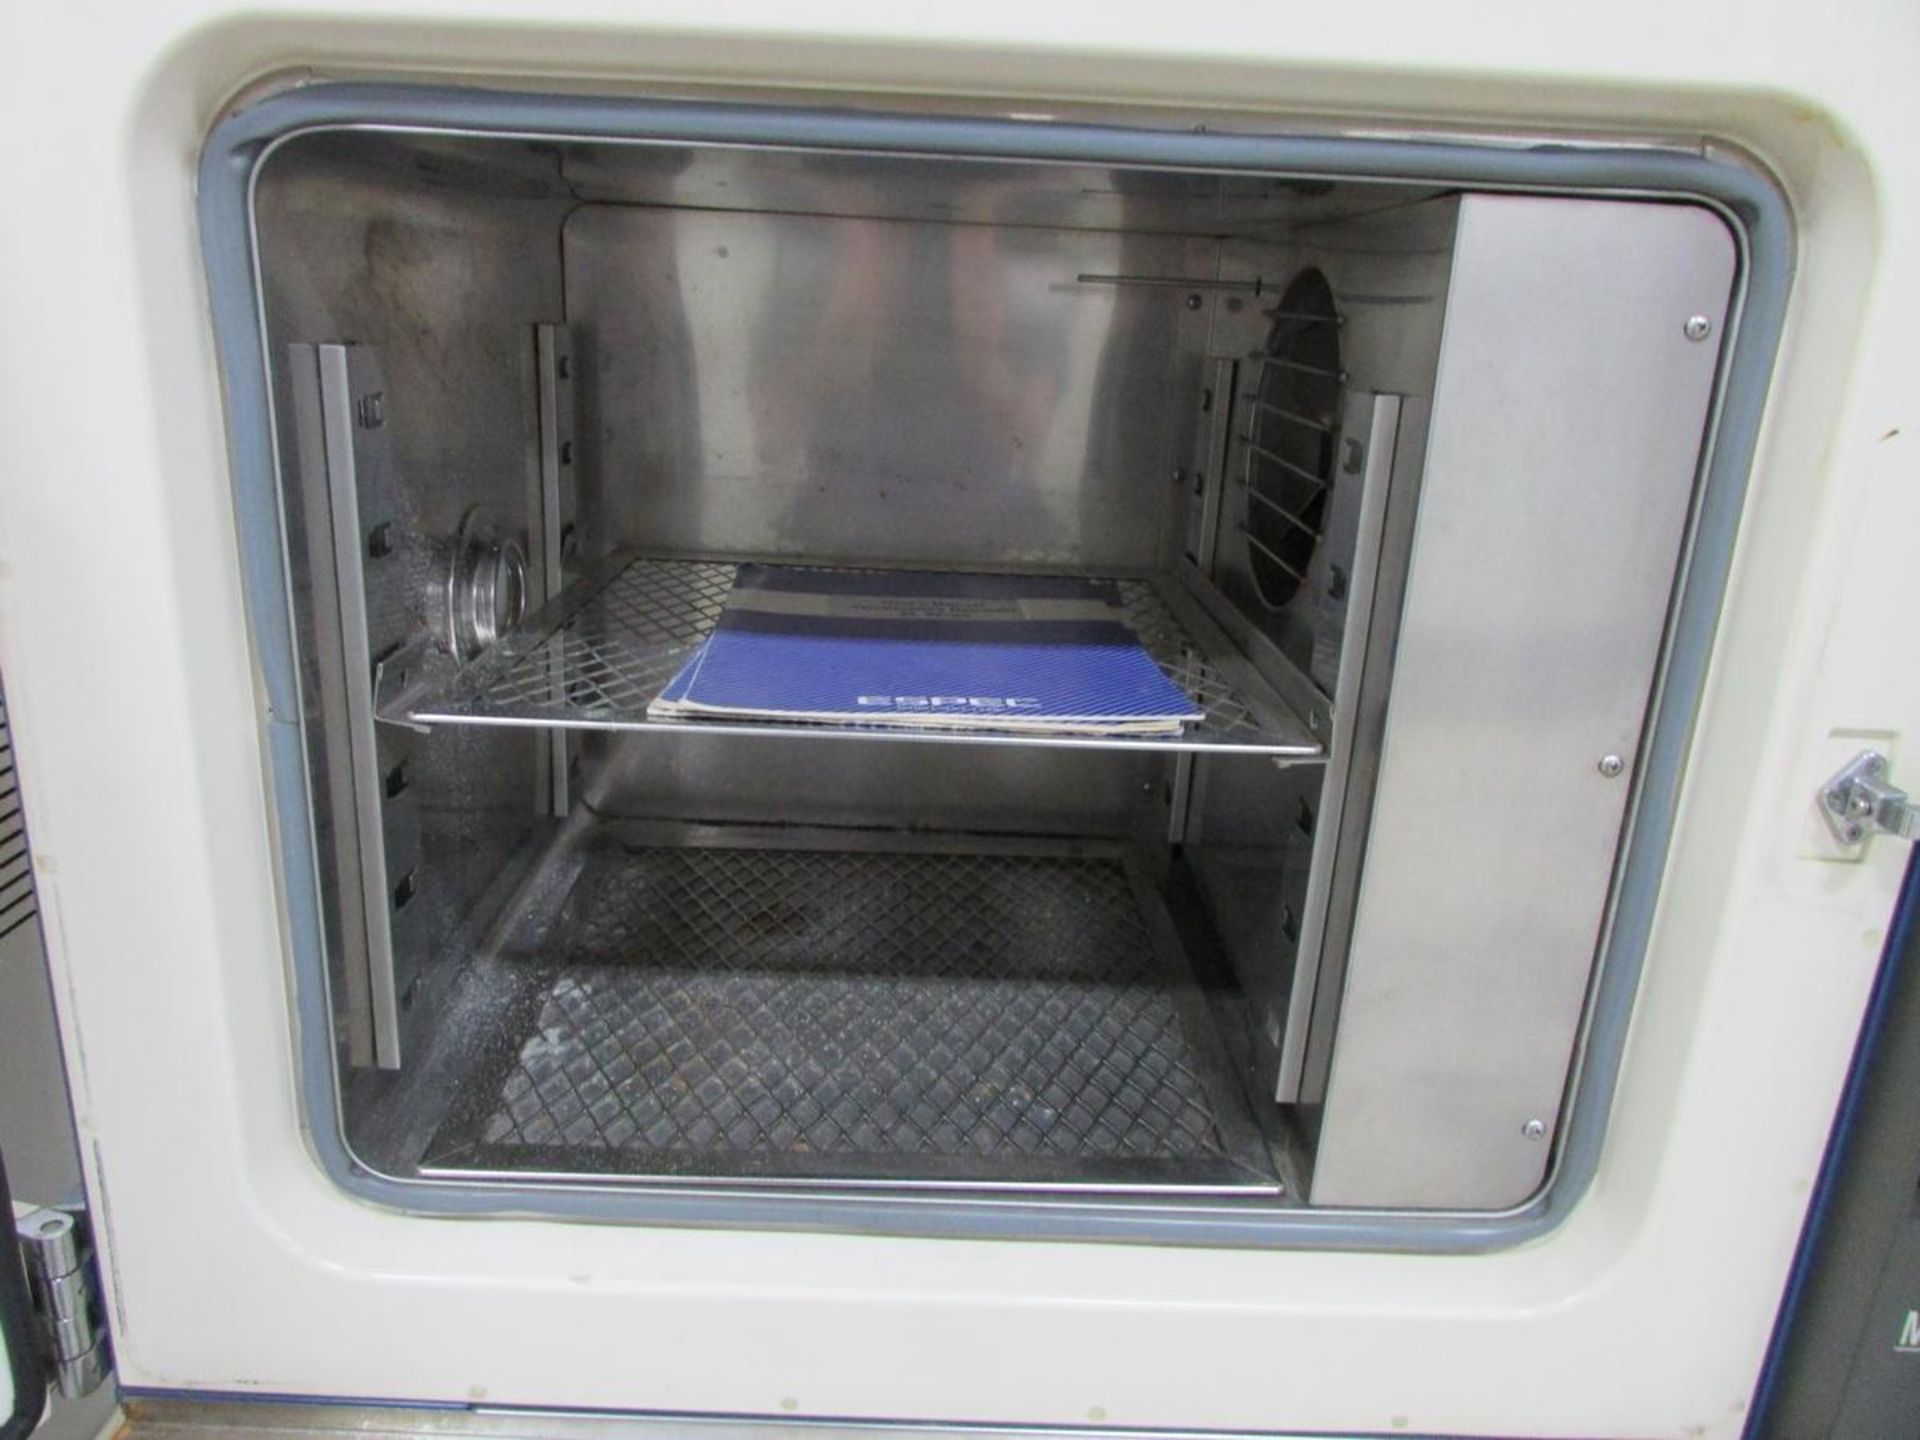 1996 Tabai Mini Subzero MC-710 Low Temperature Environmental Testing Chamber - Image 5 of 10